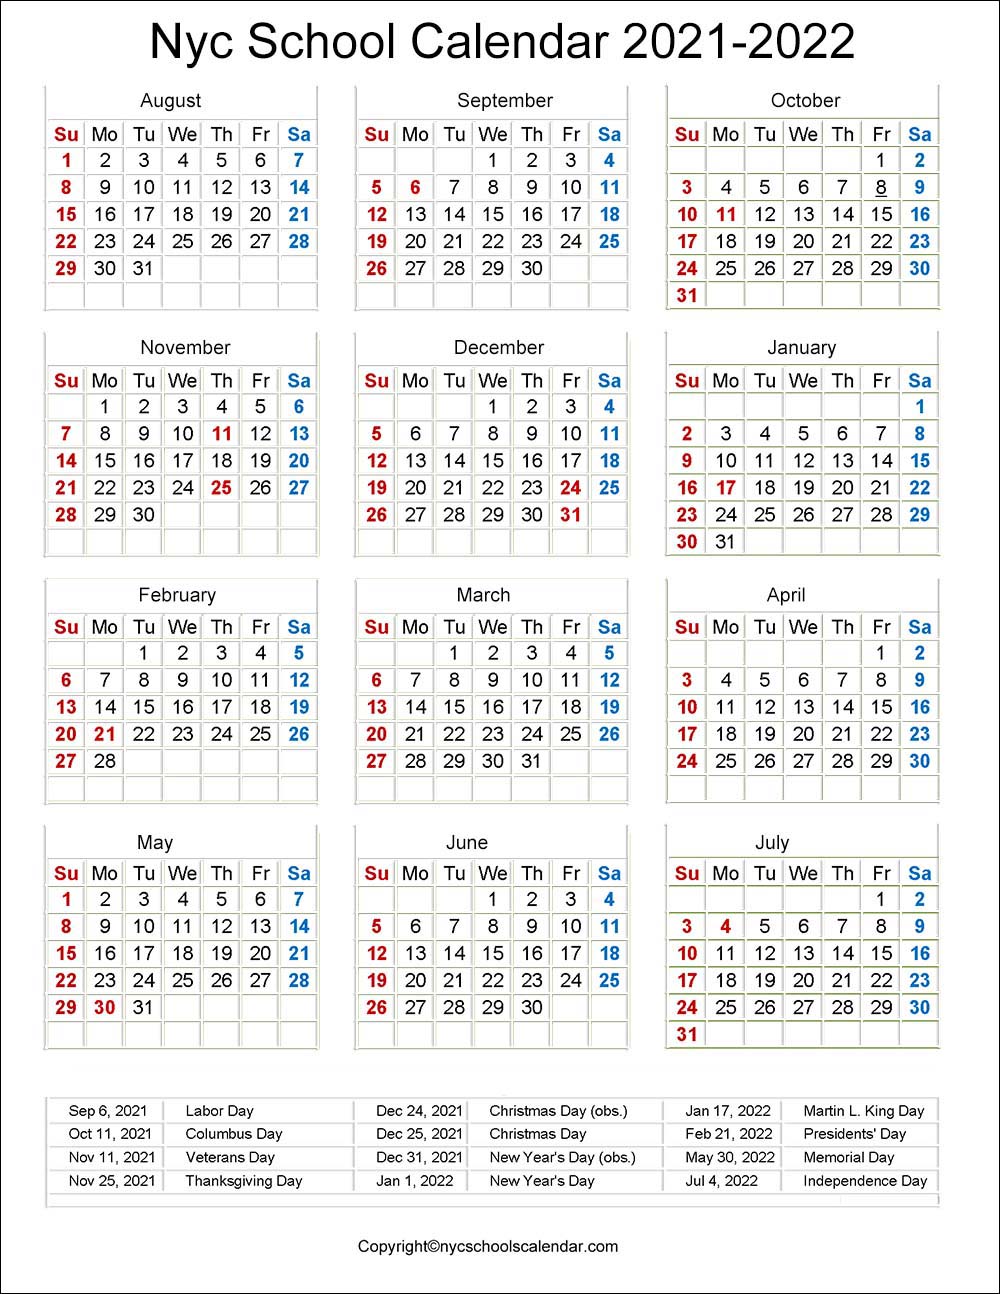 NYC DOE Calendar 2021